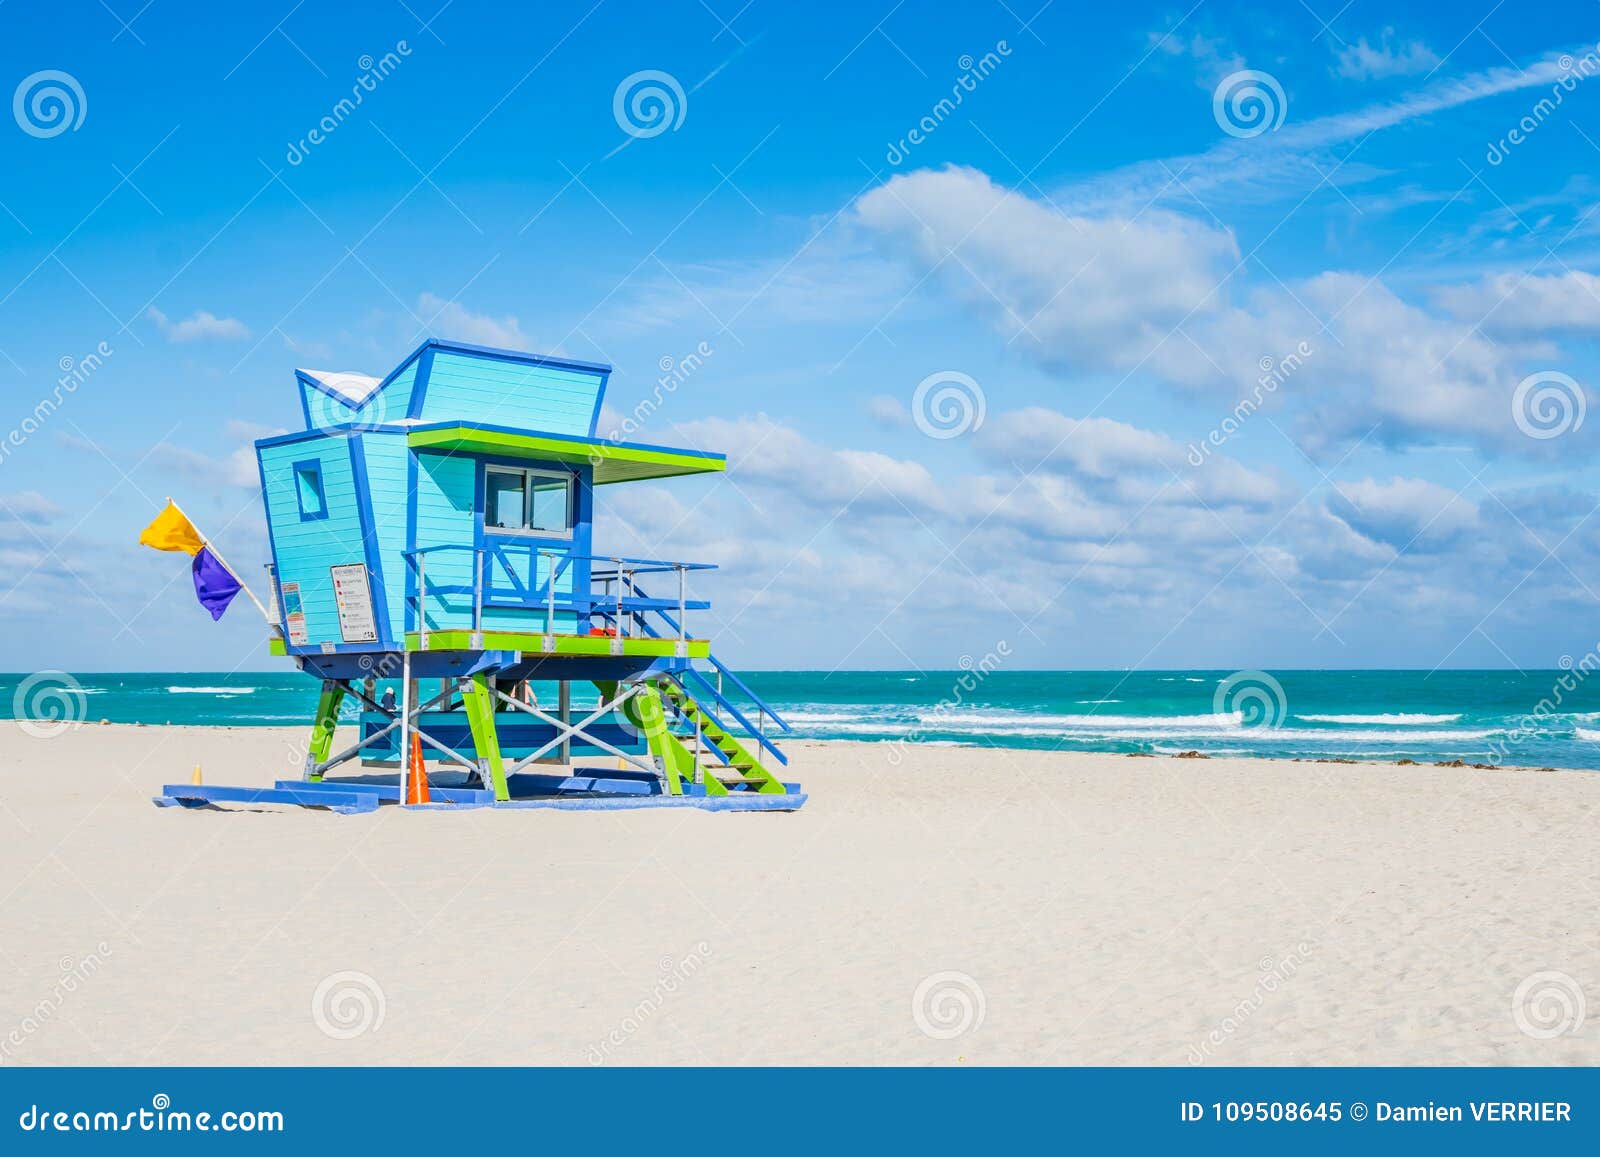 miami beach lifeguard stand in the florida sunshine